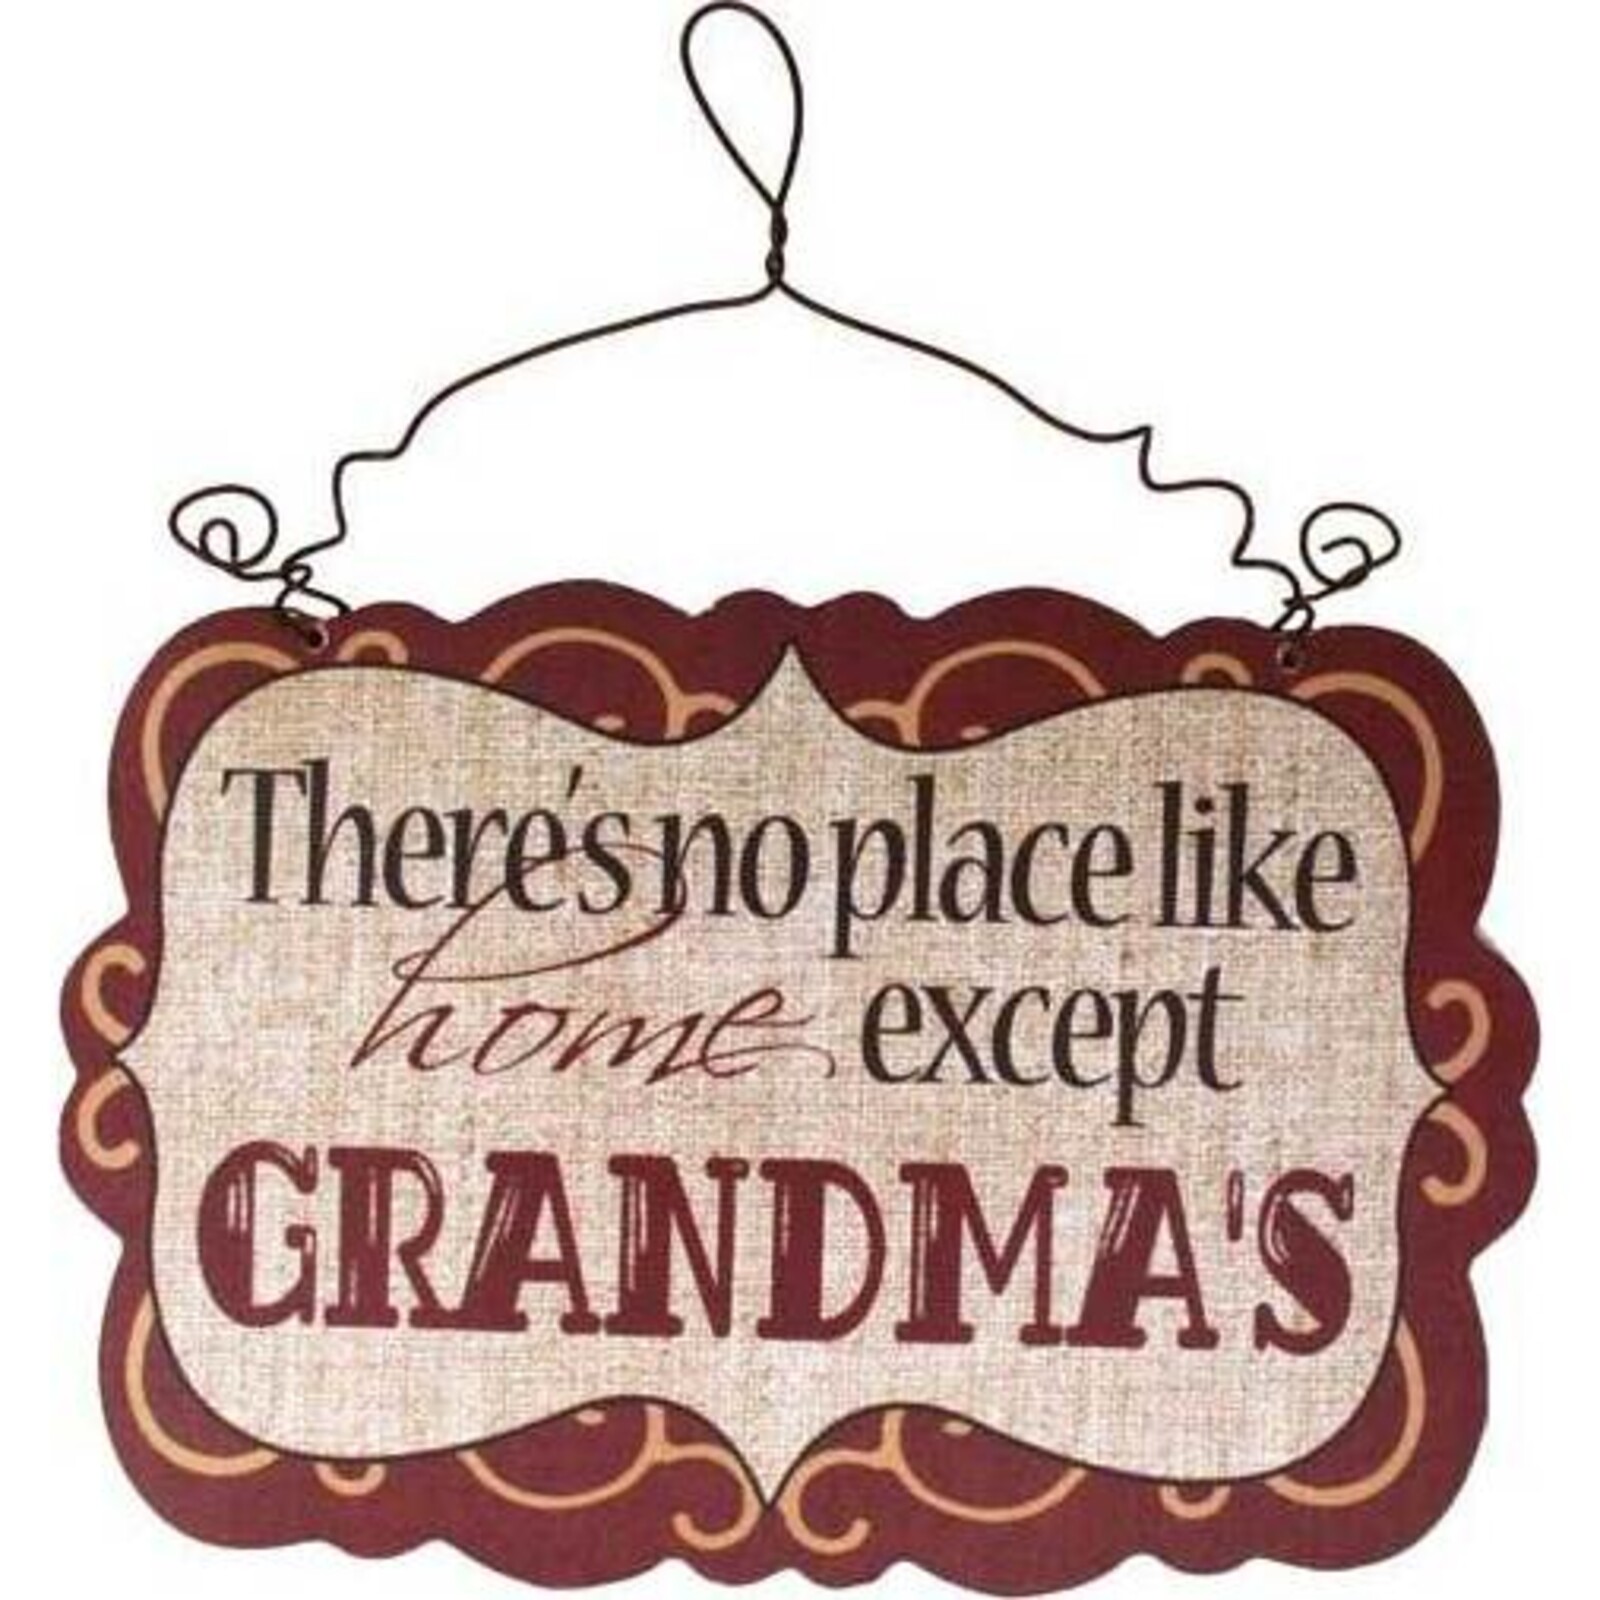 Sign Except Grandmas